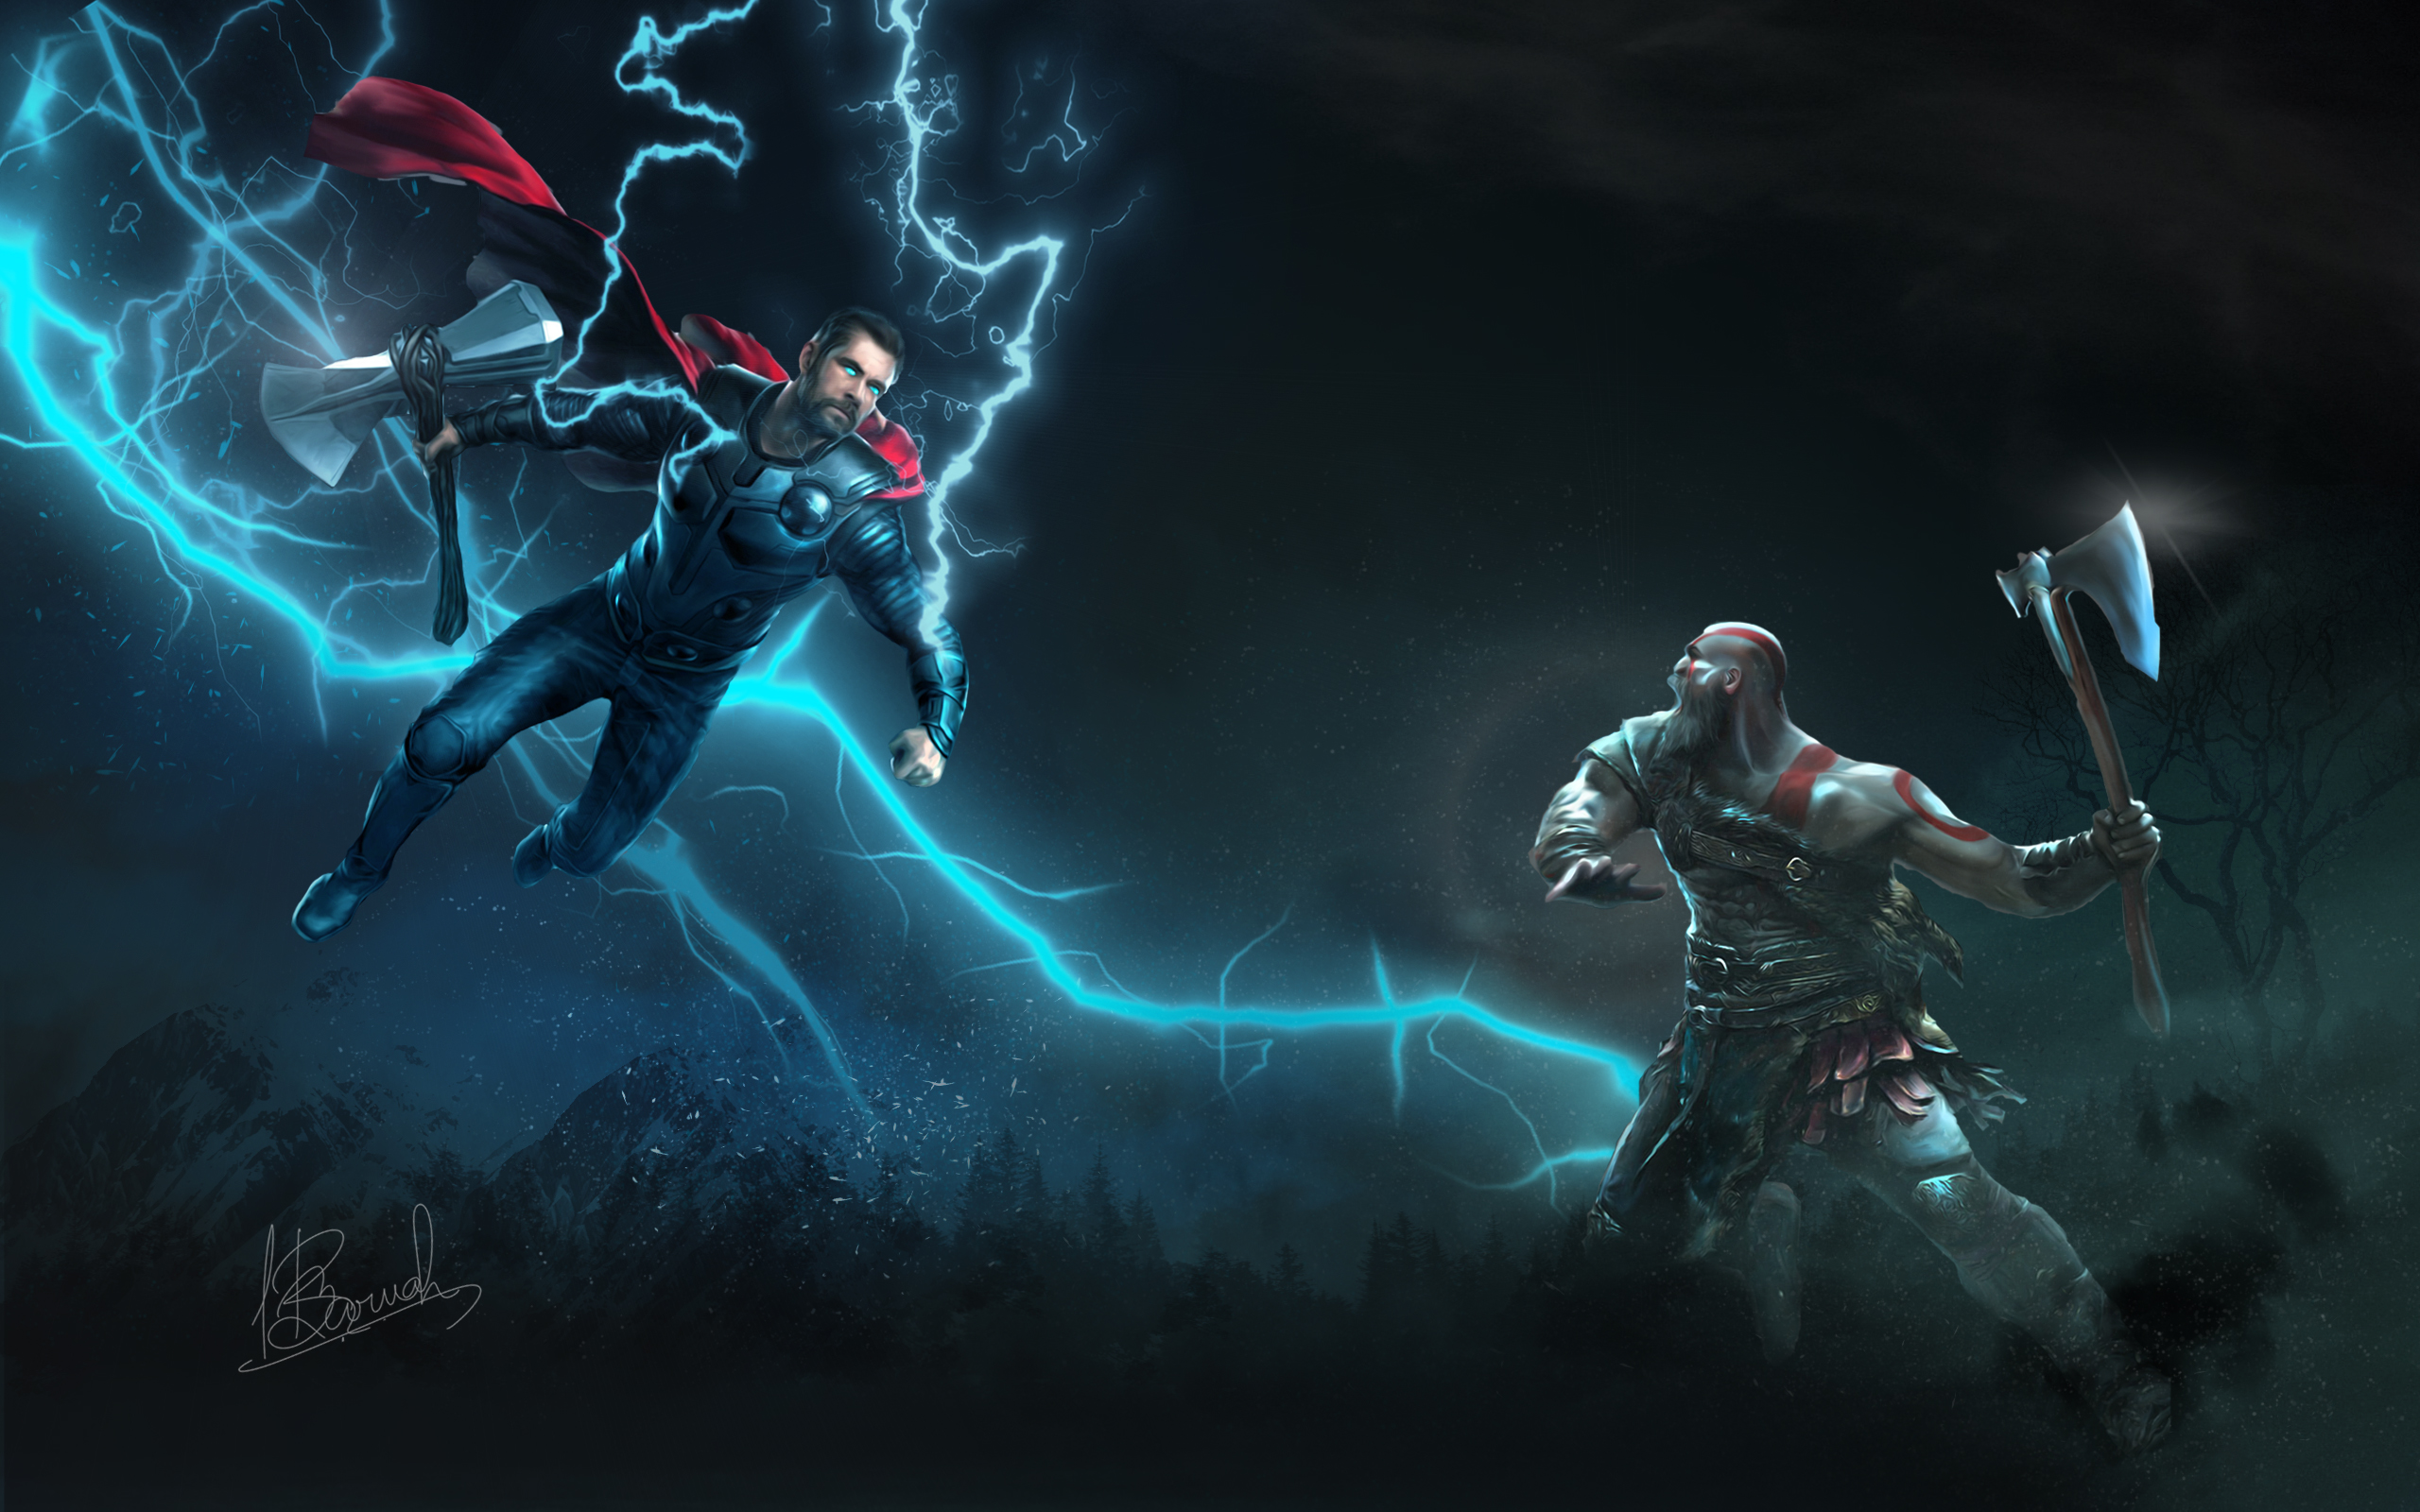 HD wallpaper: God of War, Kratos, Atreus, Thor (Marvel Comics)